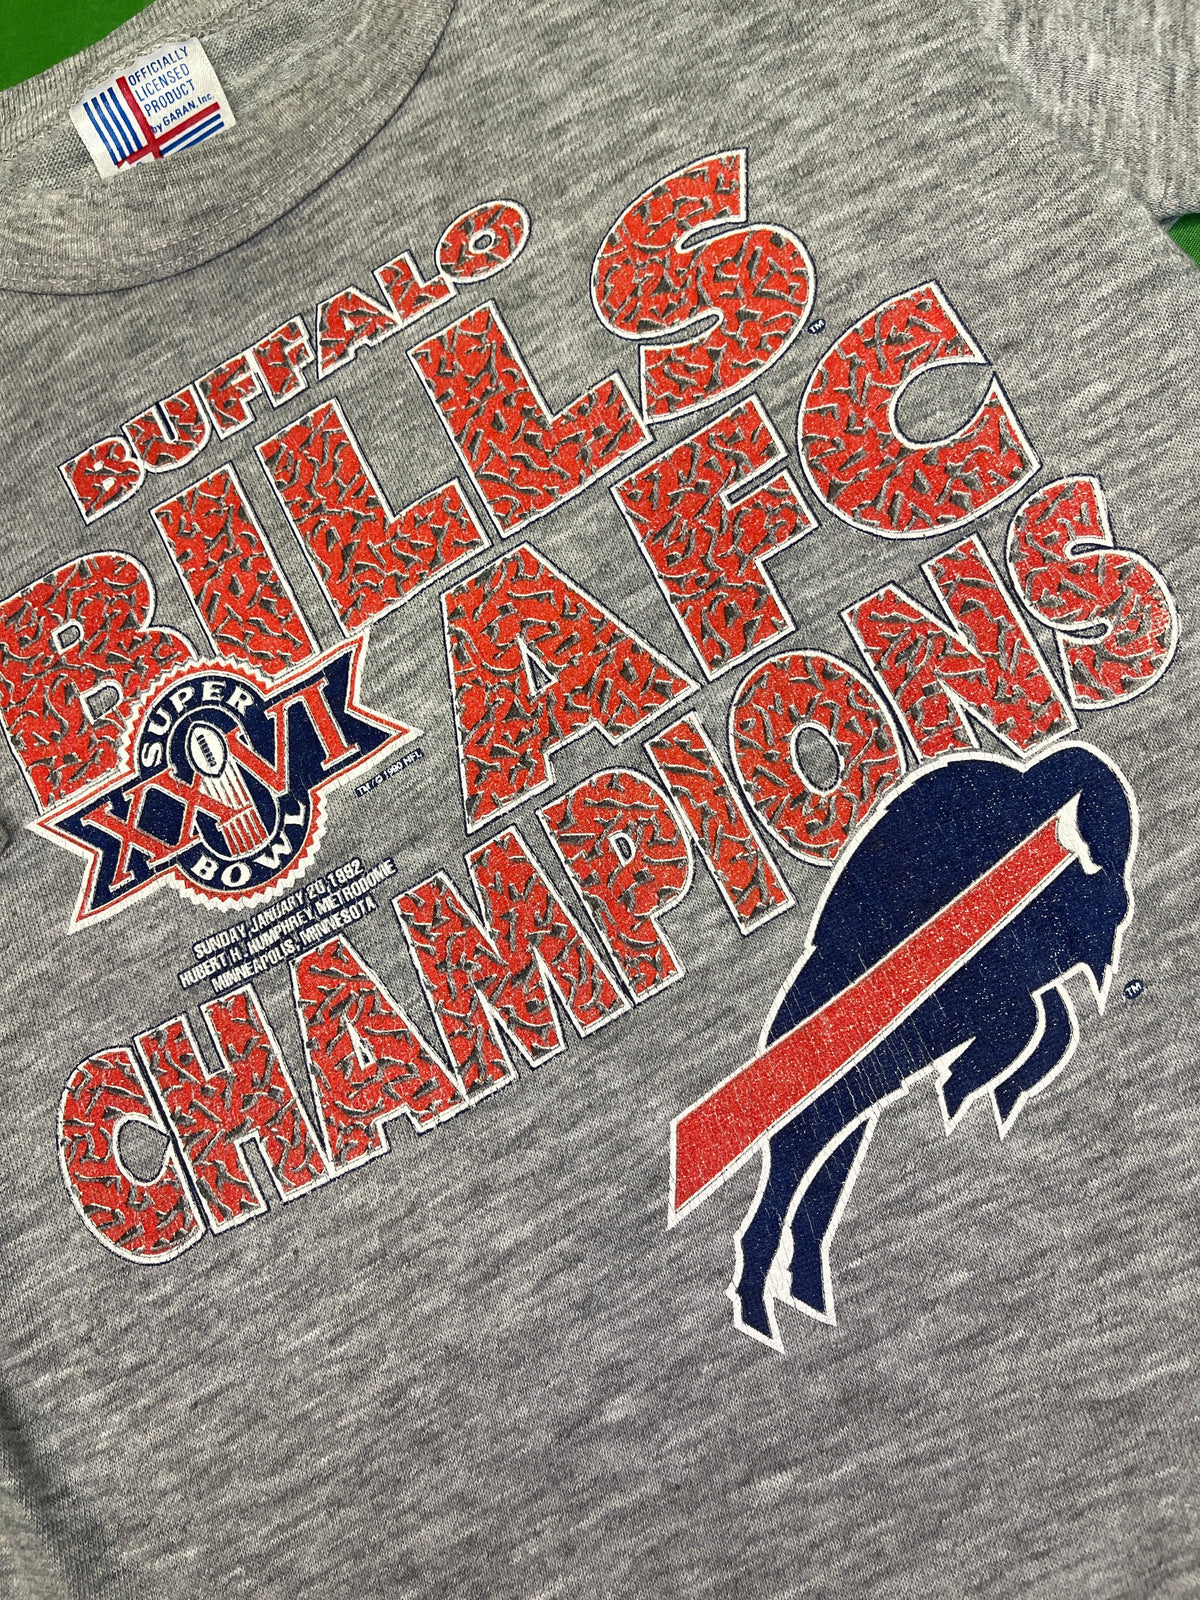 NFL Buffalo Bills Vintage Super Bowl XXVI T-Shirt Youth Small 6-8